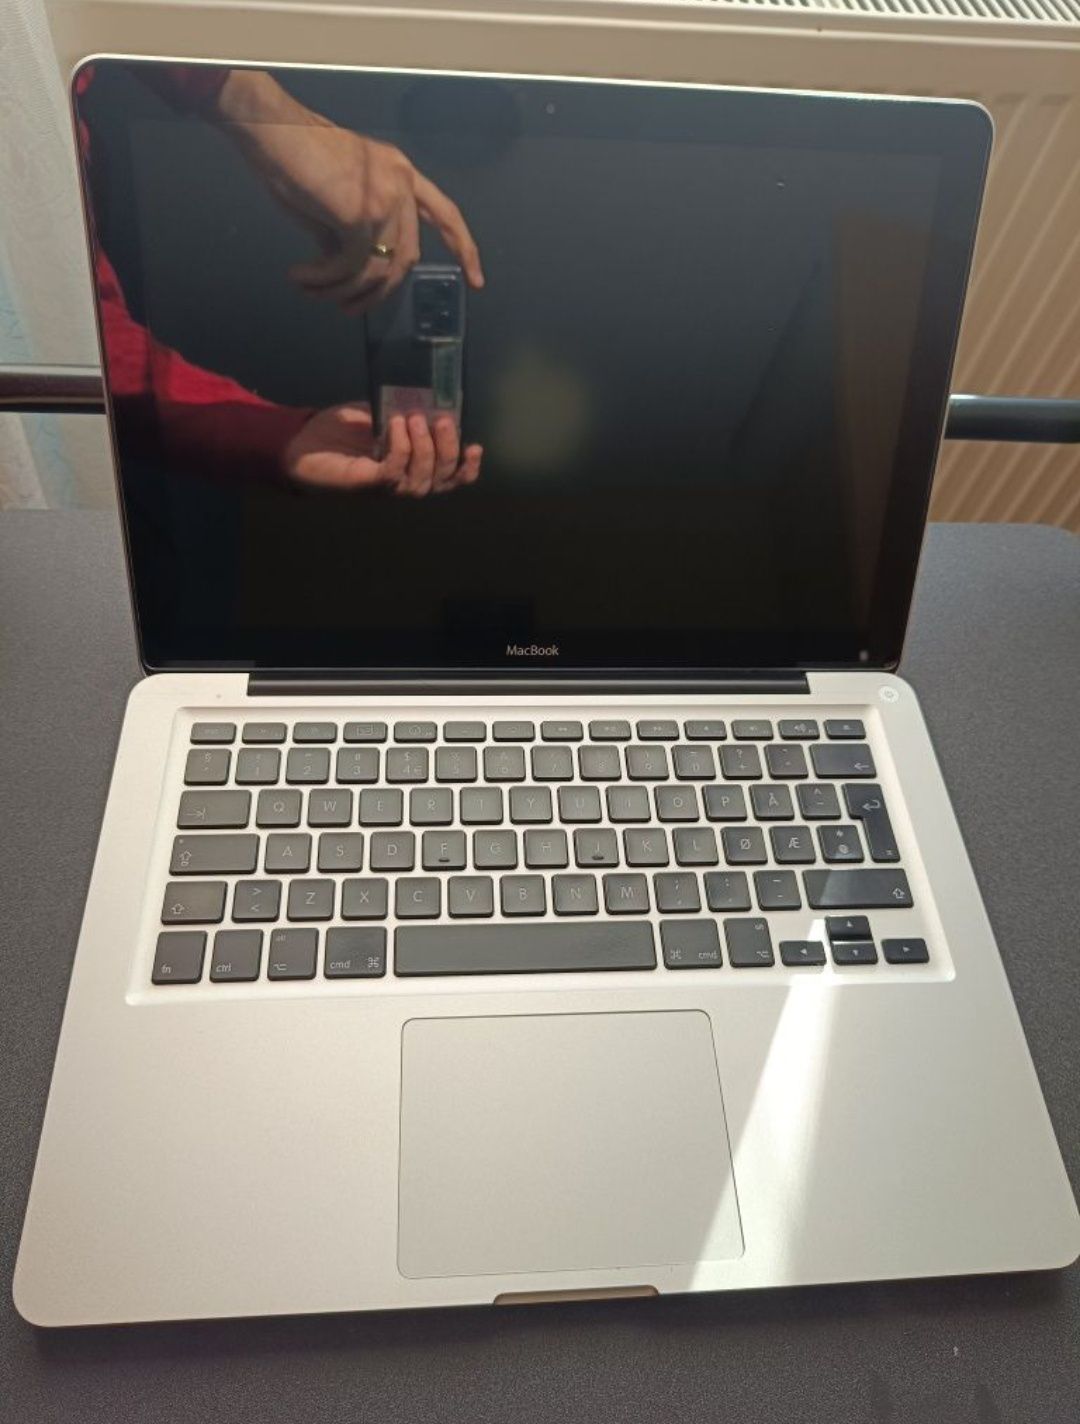 Apple MacBook 13-inch 2.0GHz Core 2 Duo (Aluminum Unibody, Late 2008)